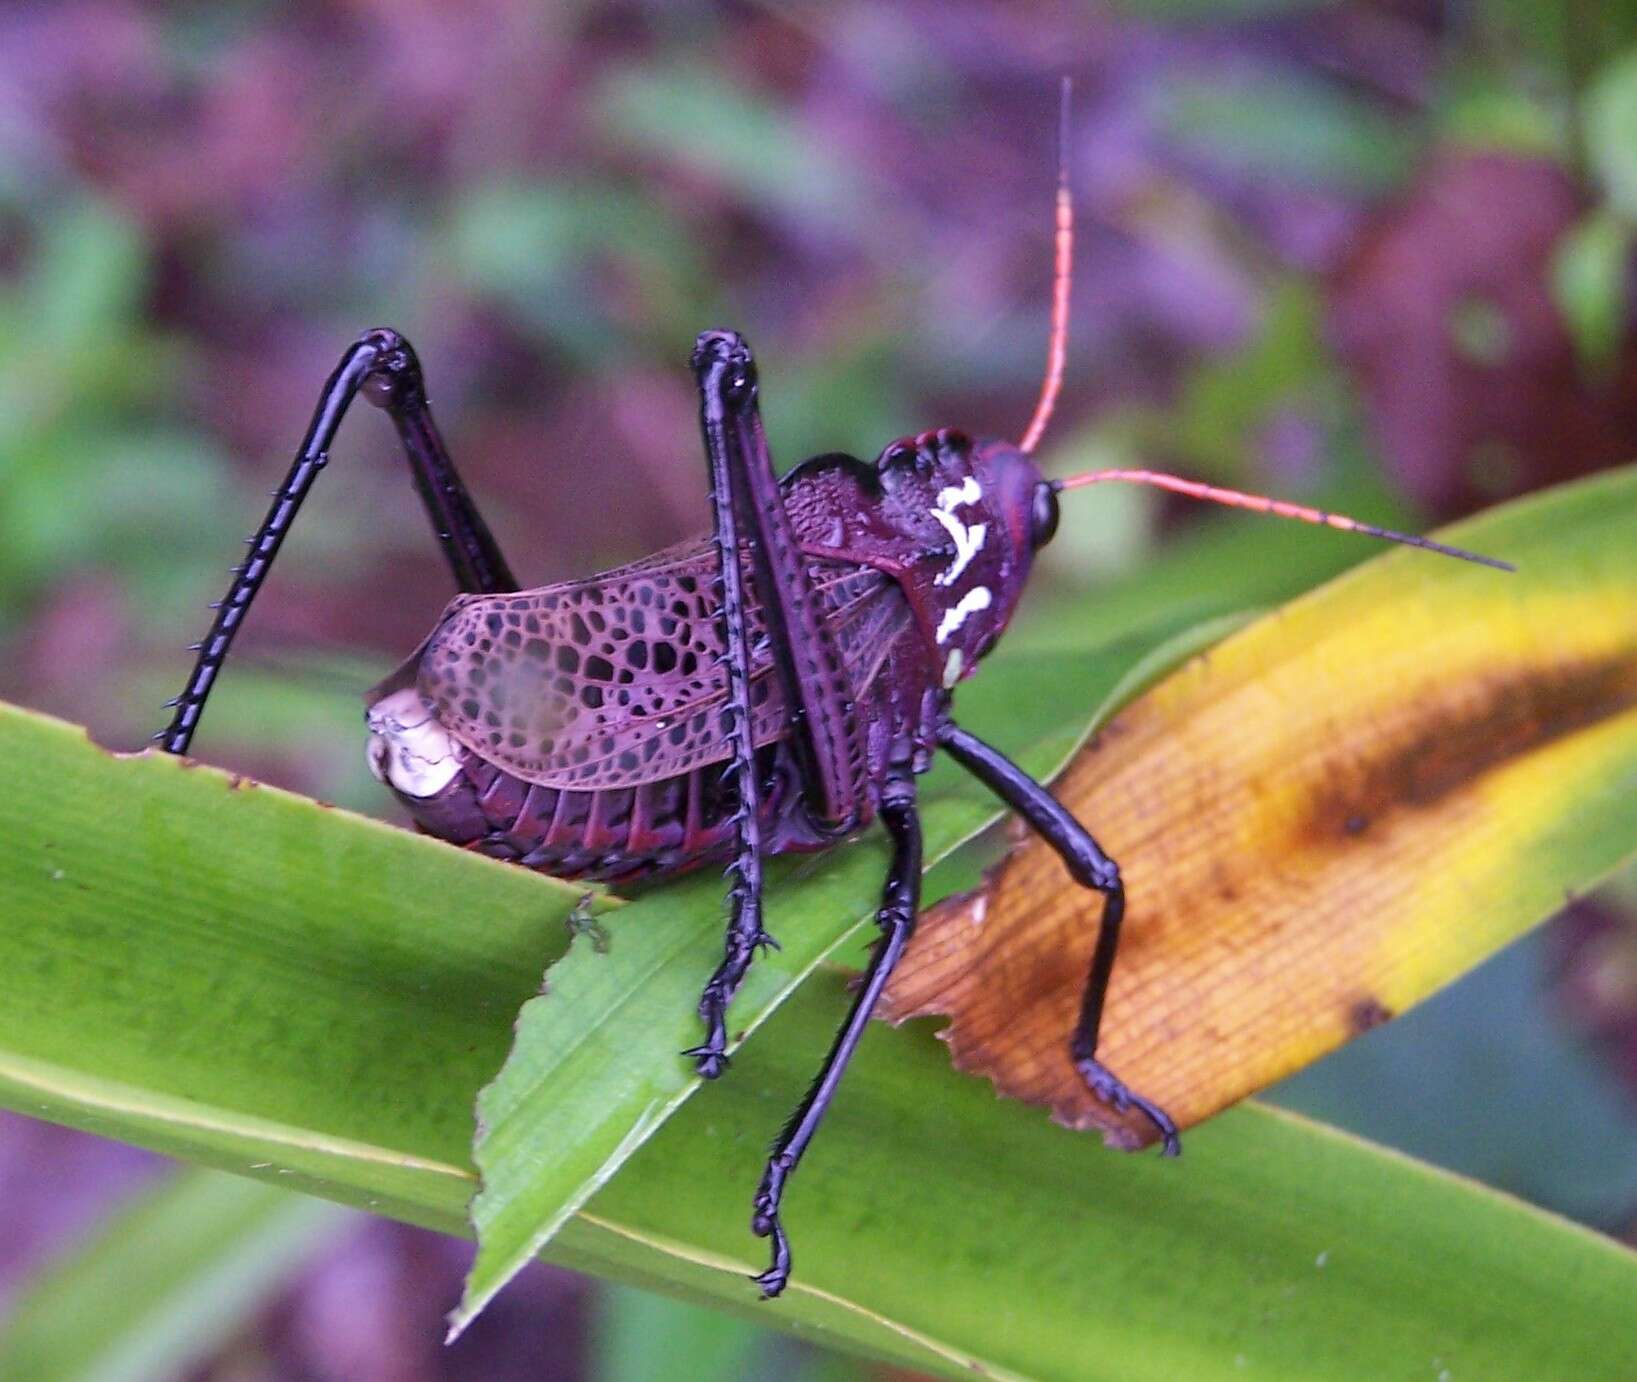 Image of lubber grasshopper